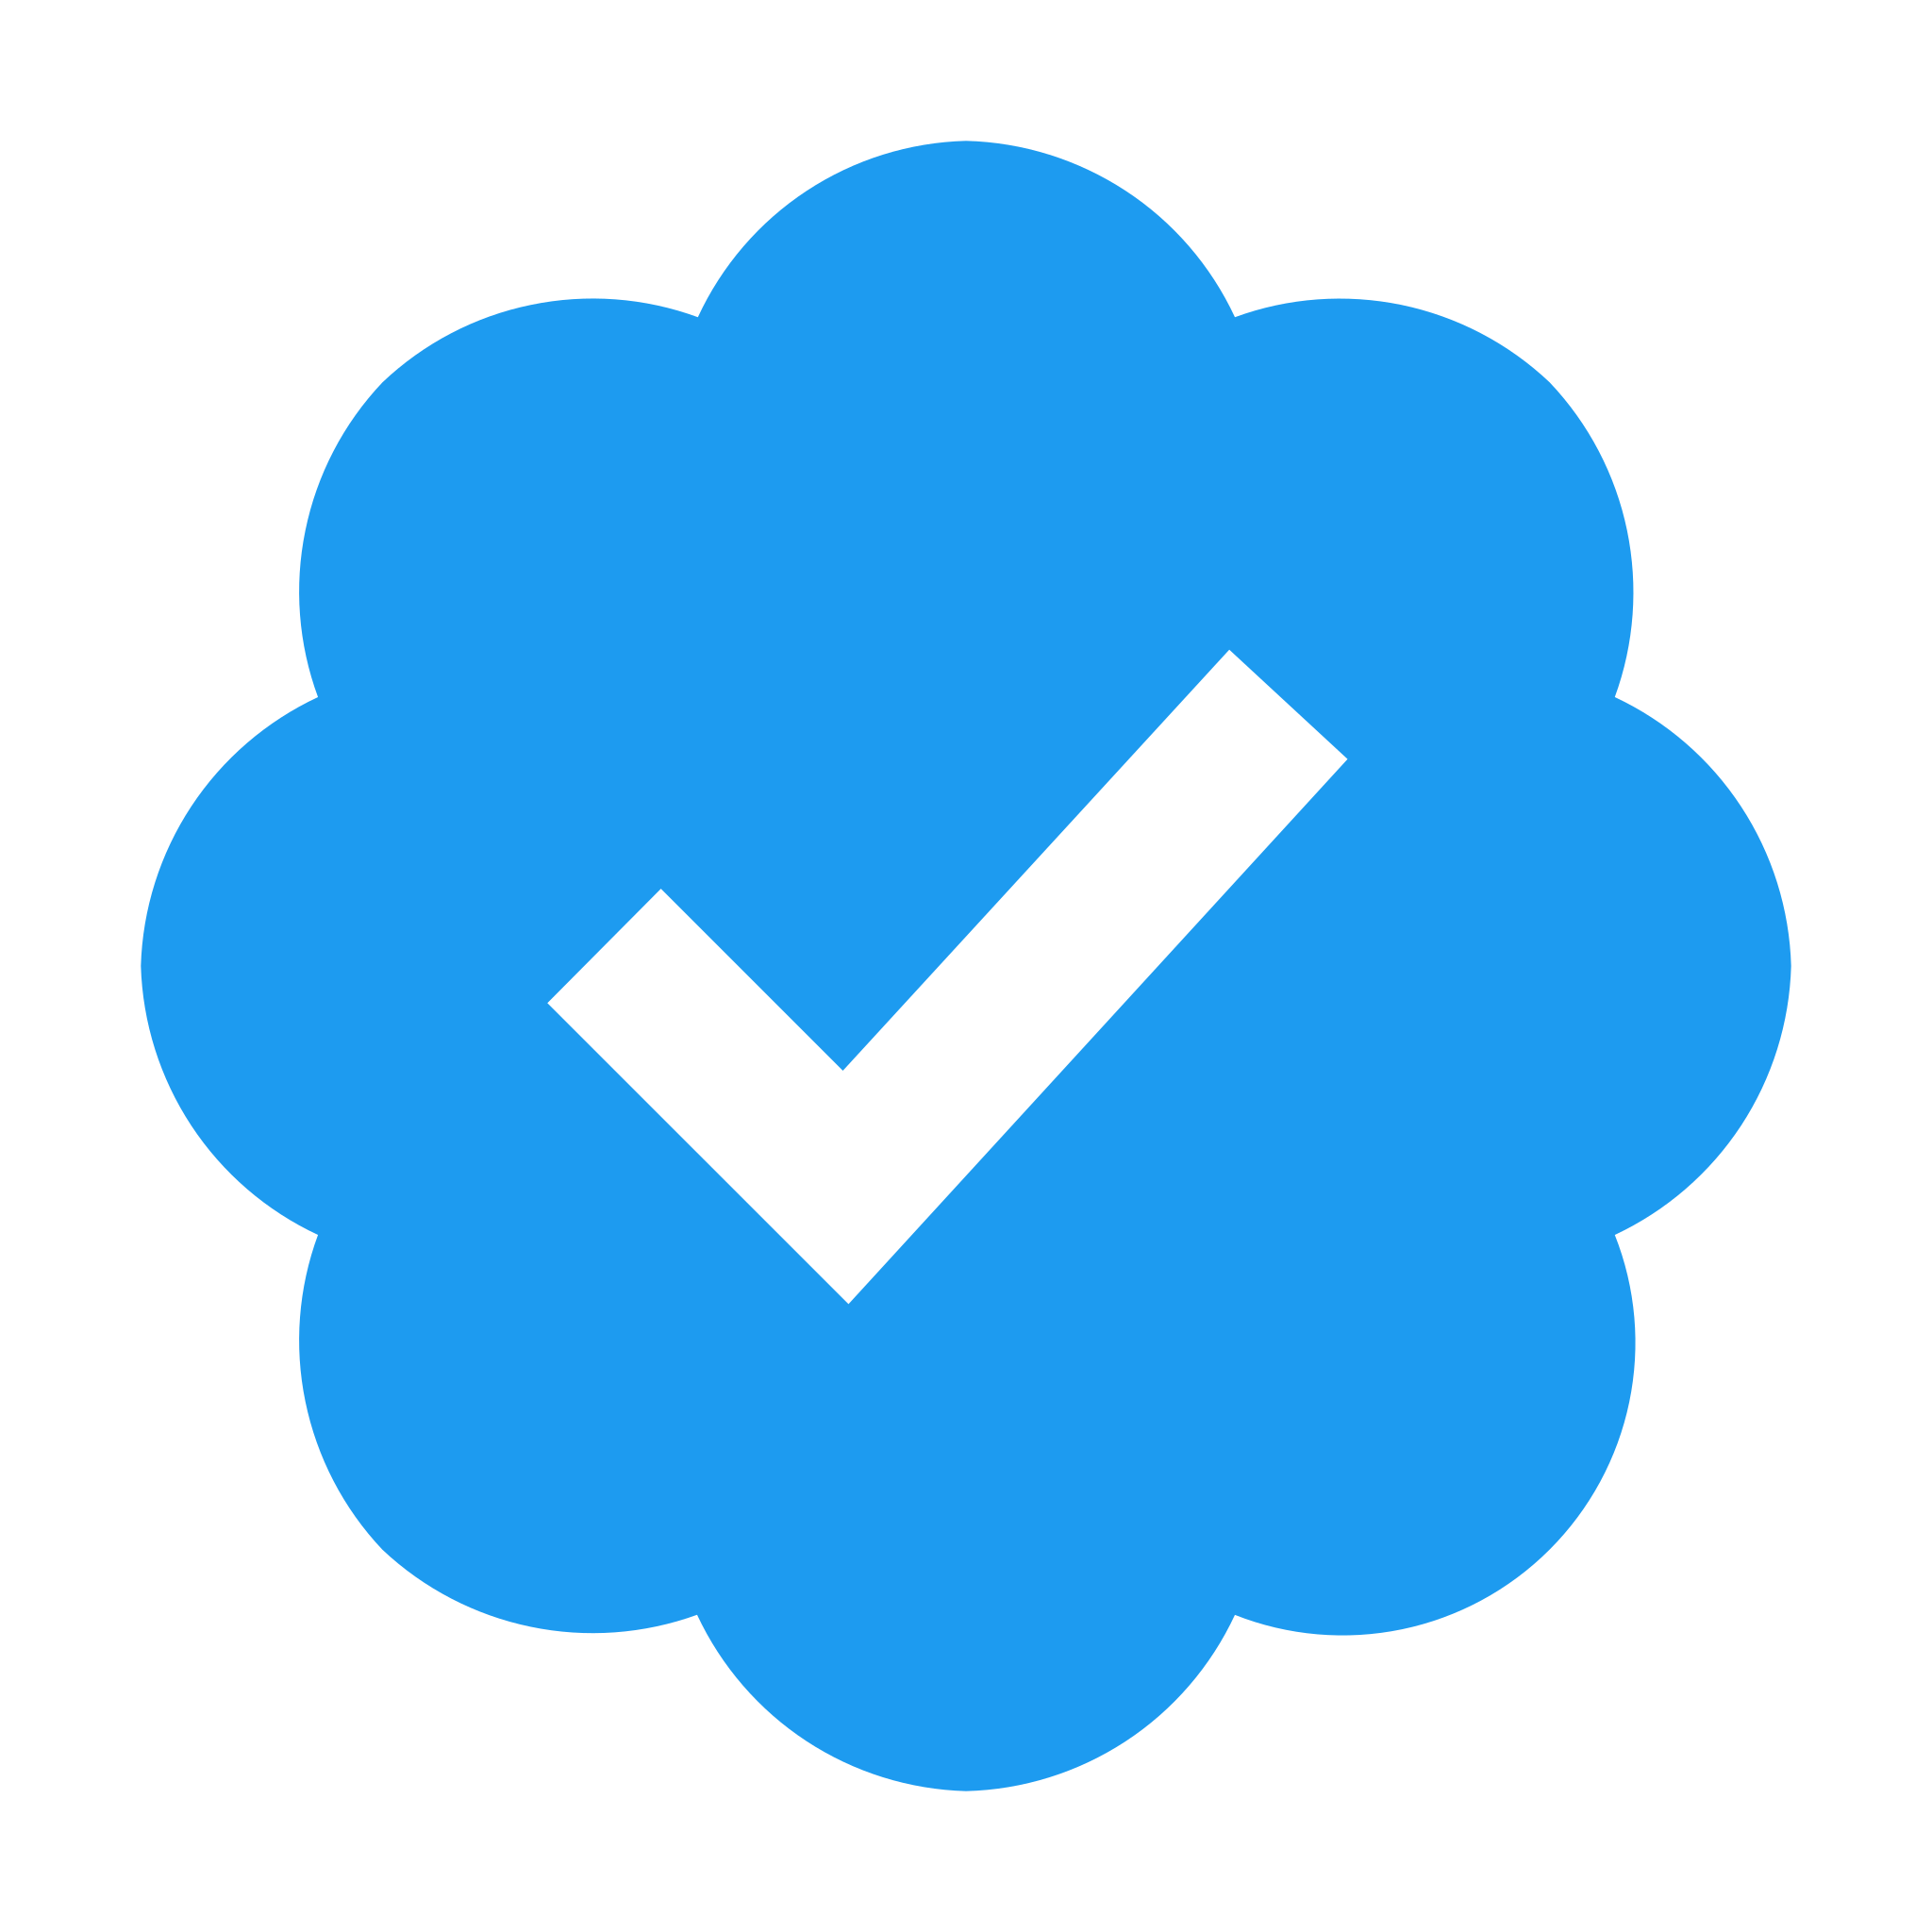 Verified badge symbol